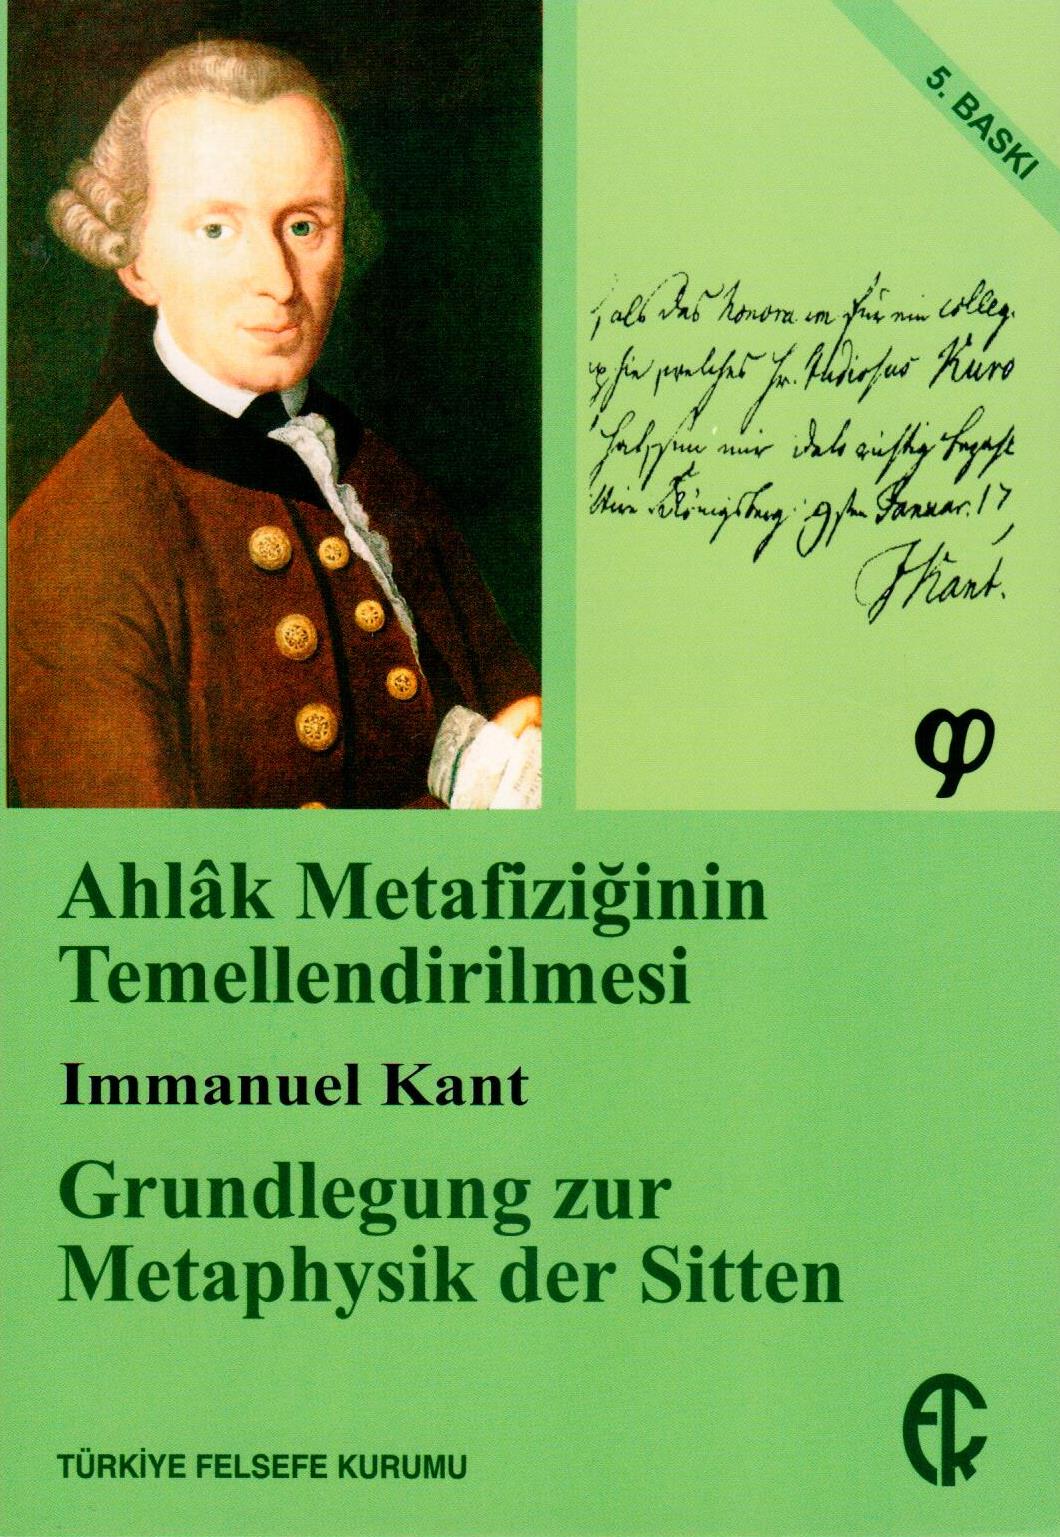 Ahlak Metafiziğinin Temellendirilmesi / Immanuel Kant